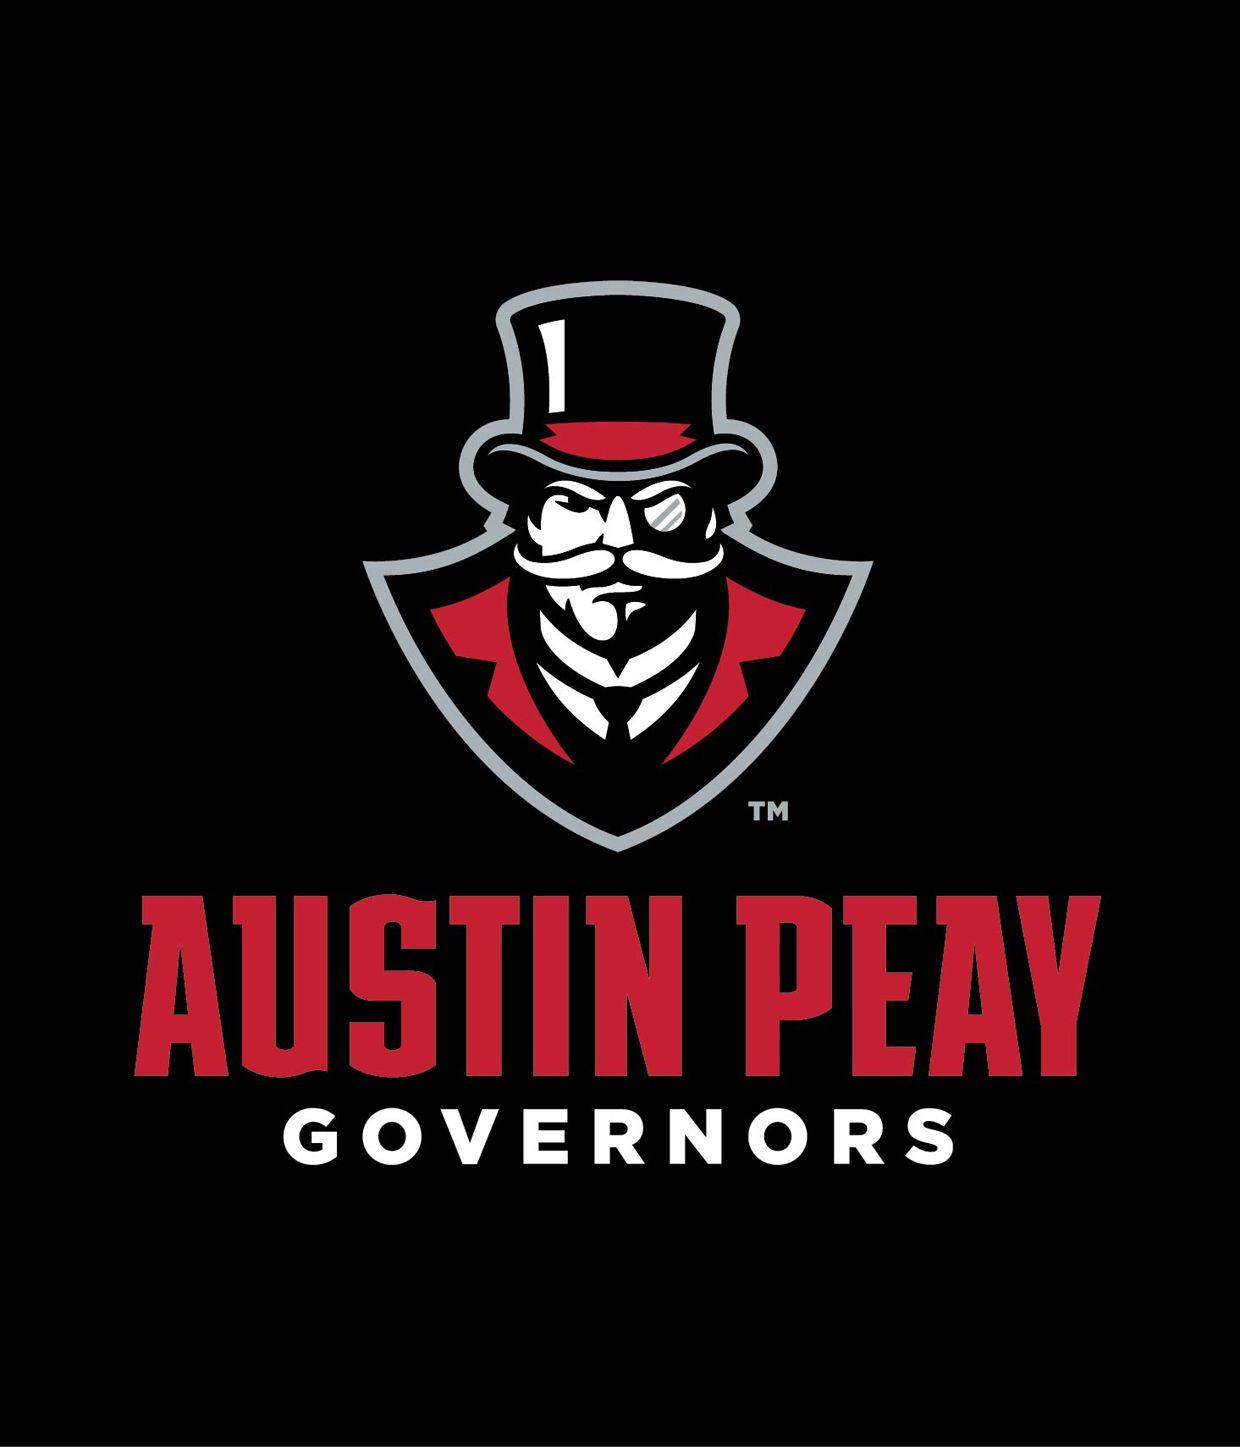 APSU Logo - APSU Governors reveal new visual identity | ClarksvilleNow.com